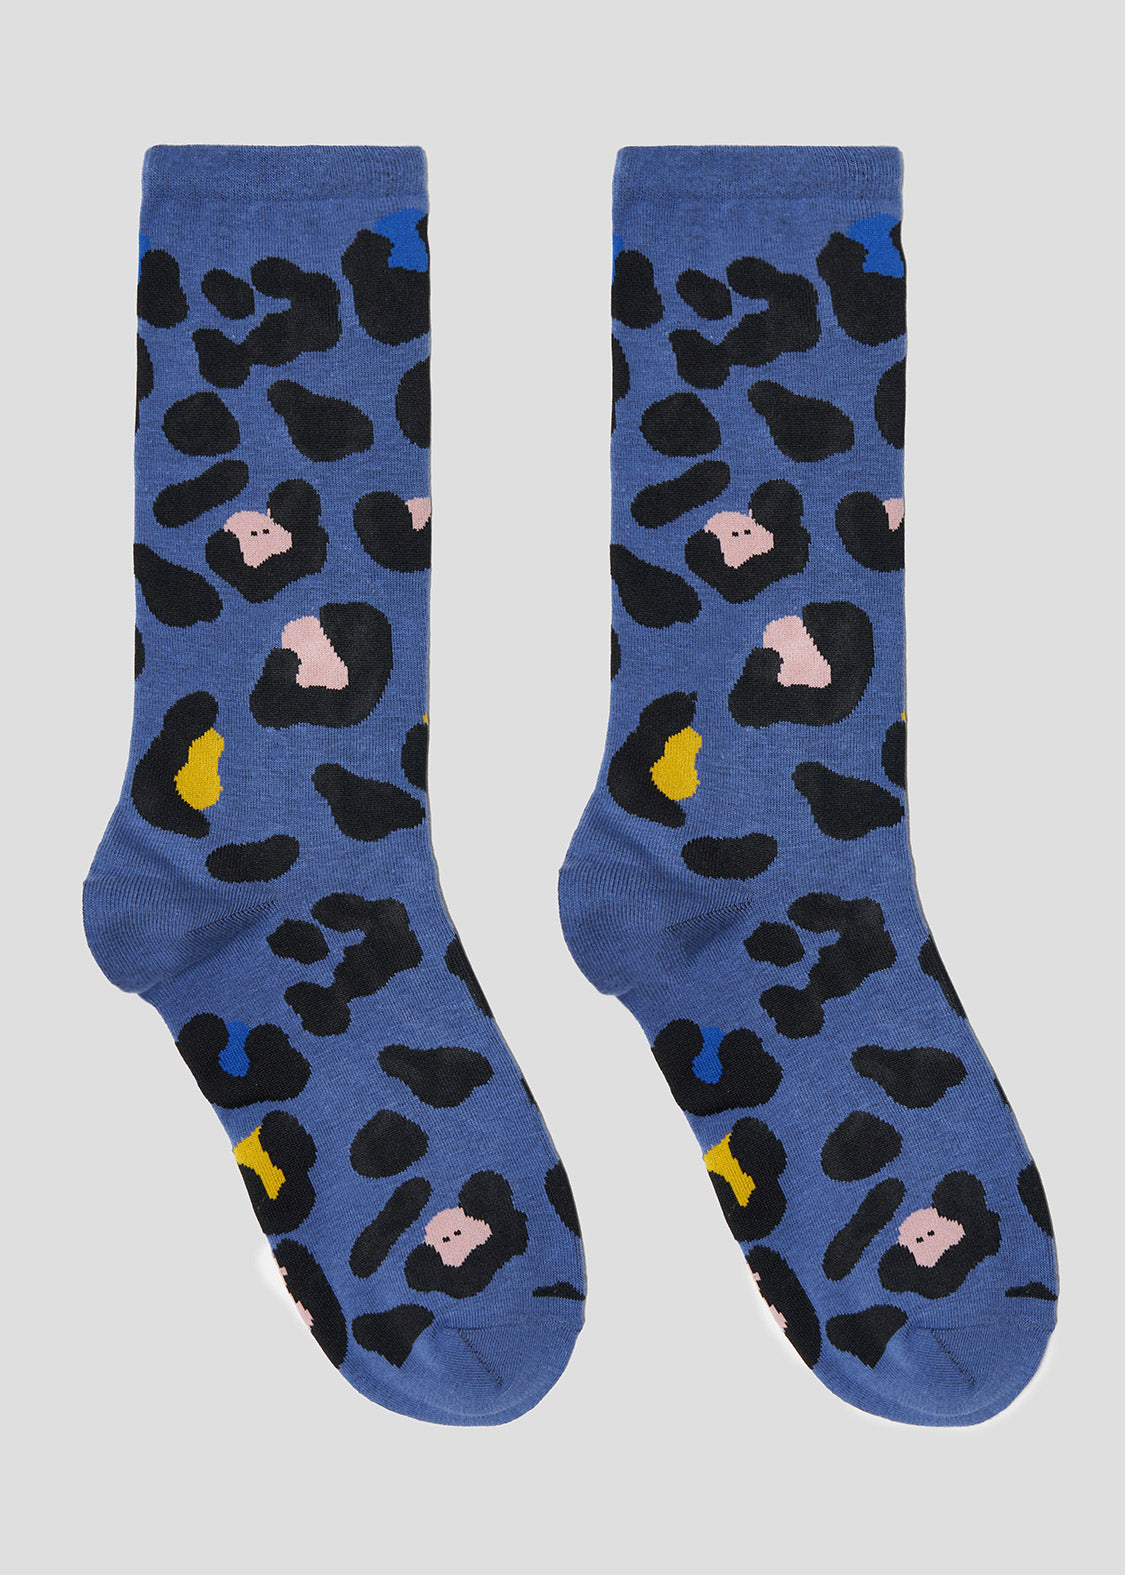 Long Socks (Leopard Print and Obachan)